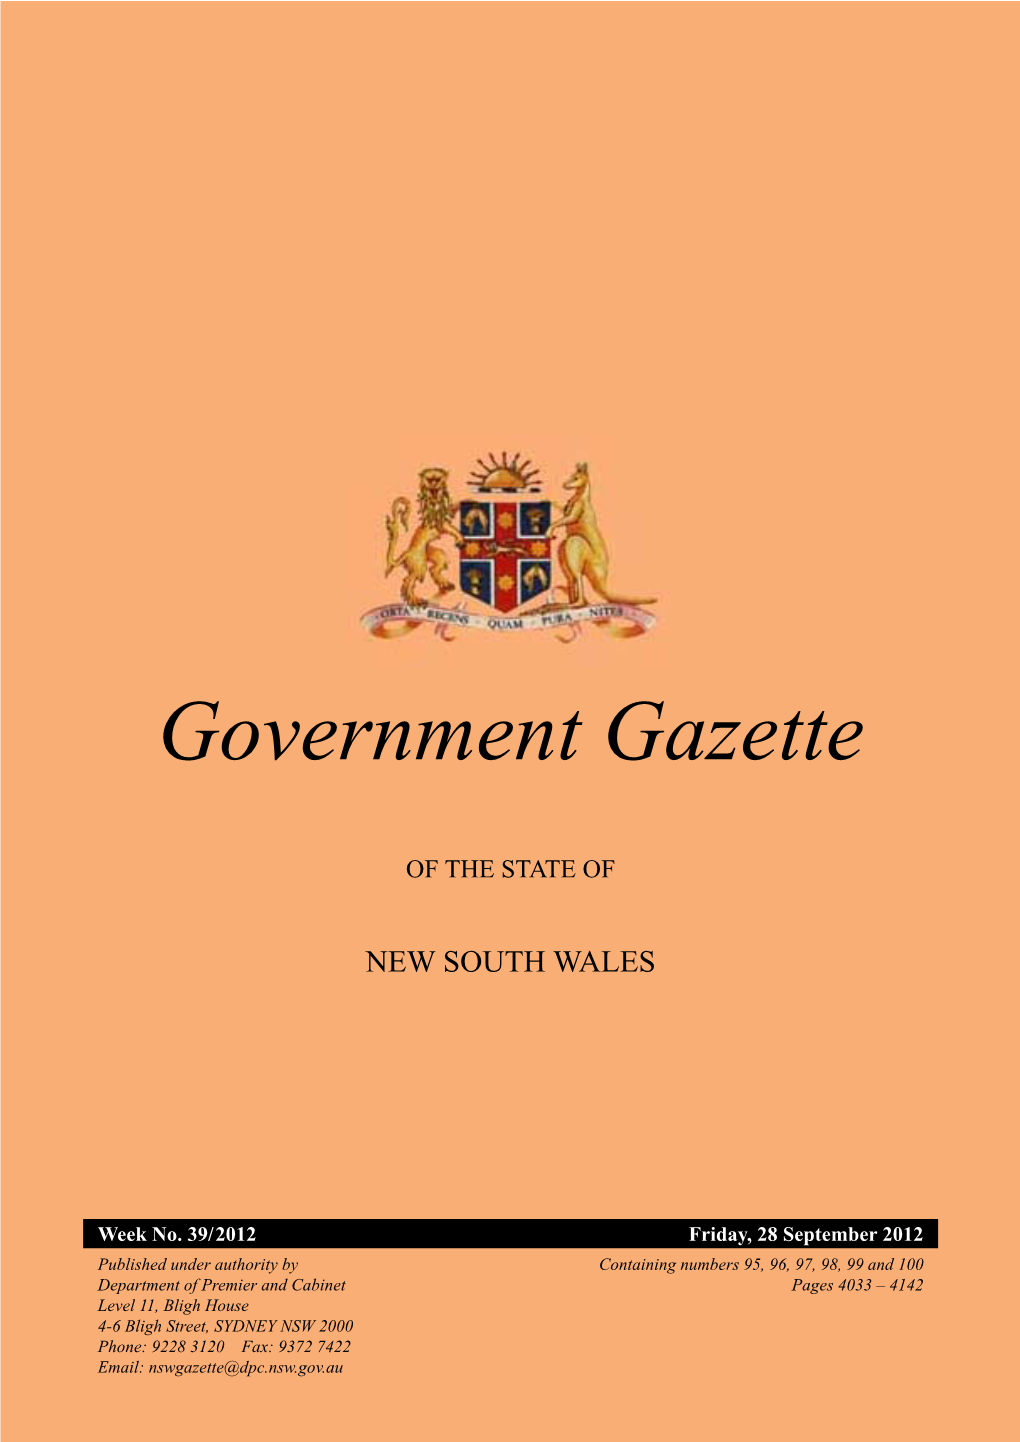 Government Gazette of 28 September 2012